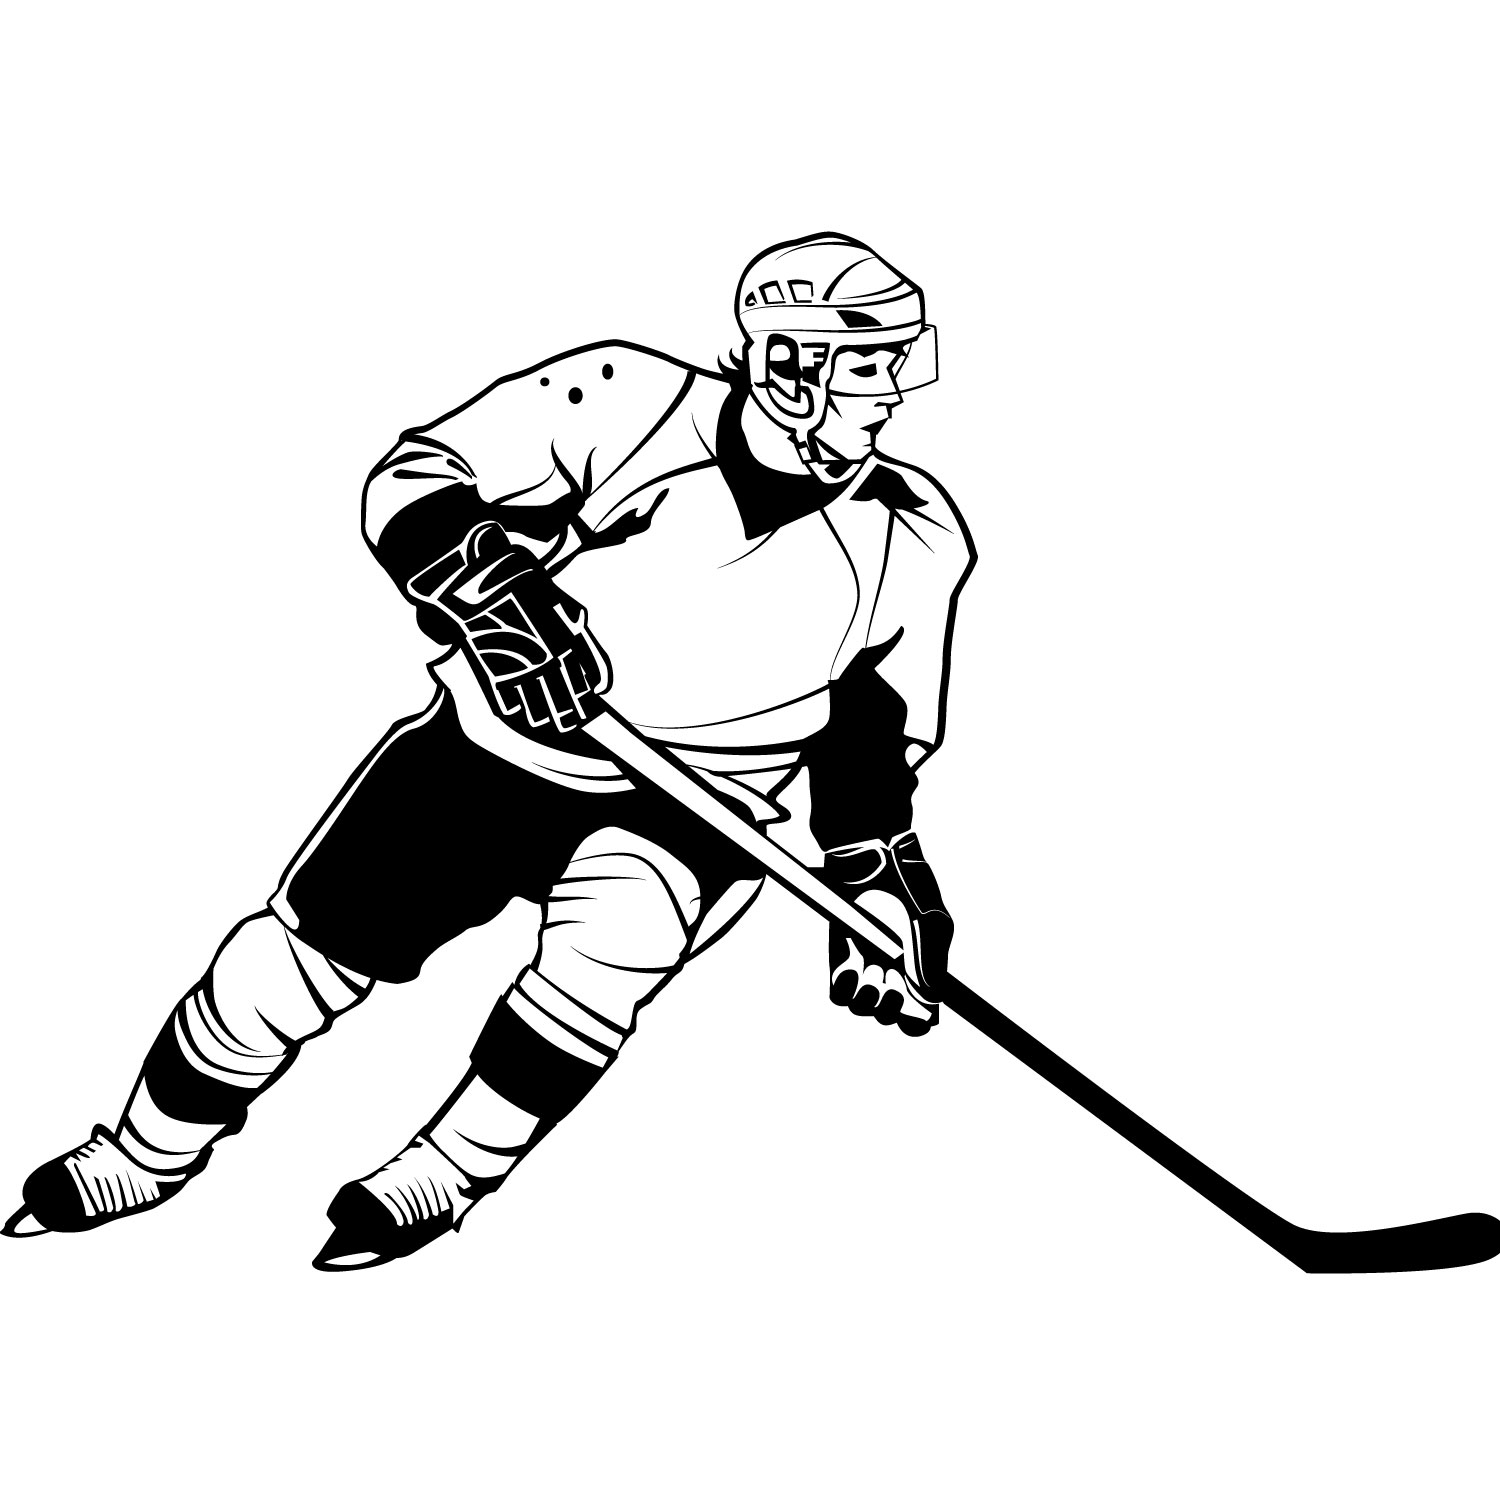 Hockey clip art border free clipart images